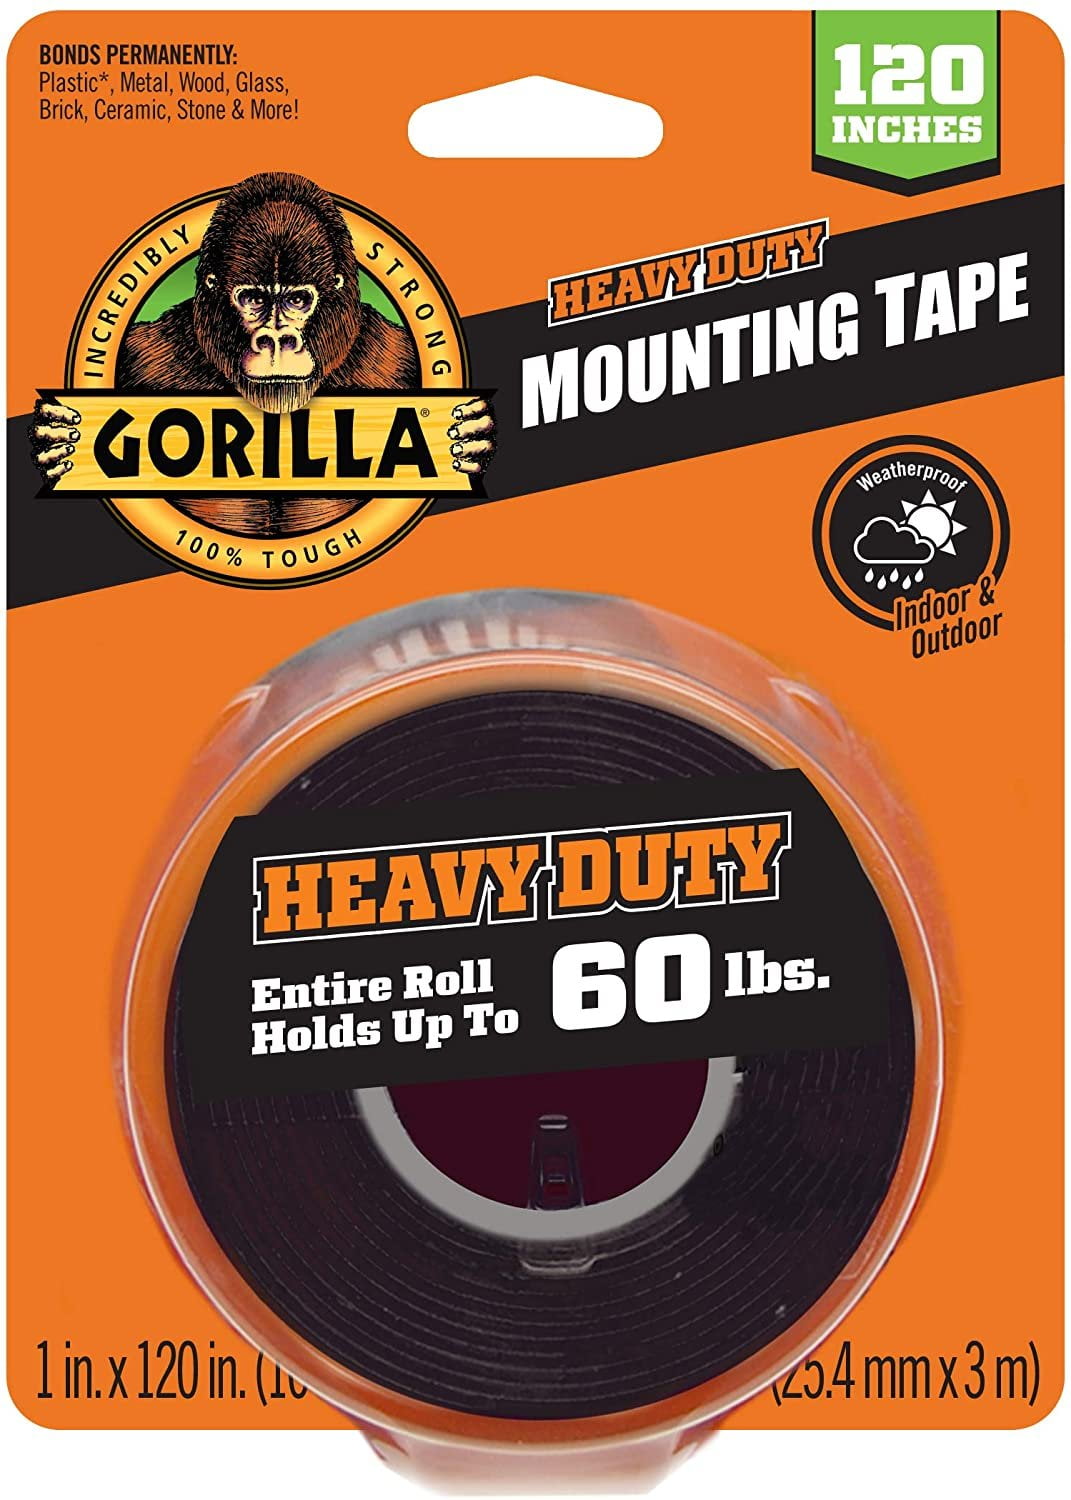  Gorilla Heavy Duty, Extra Long Double Sided Mounting